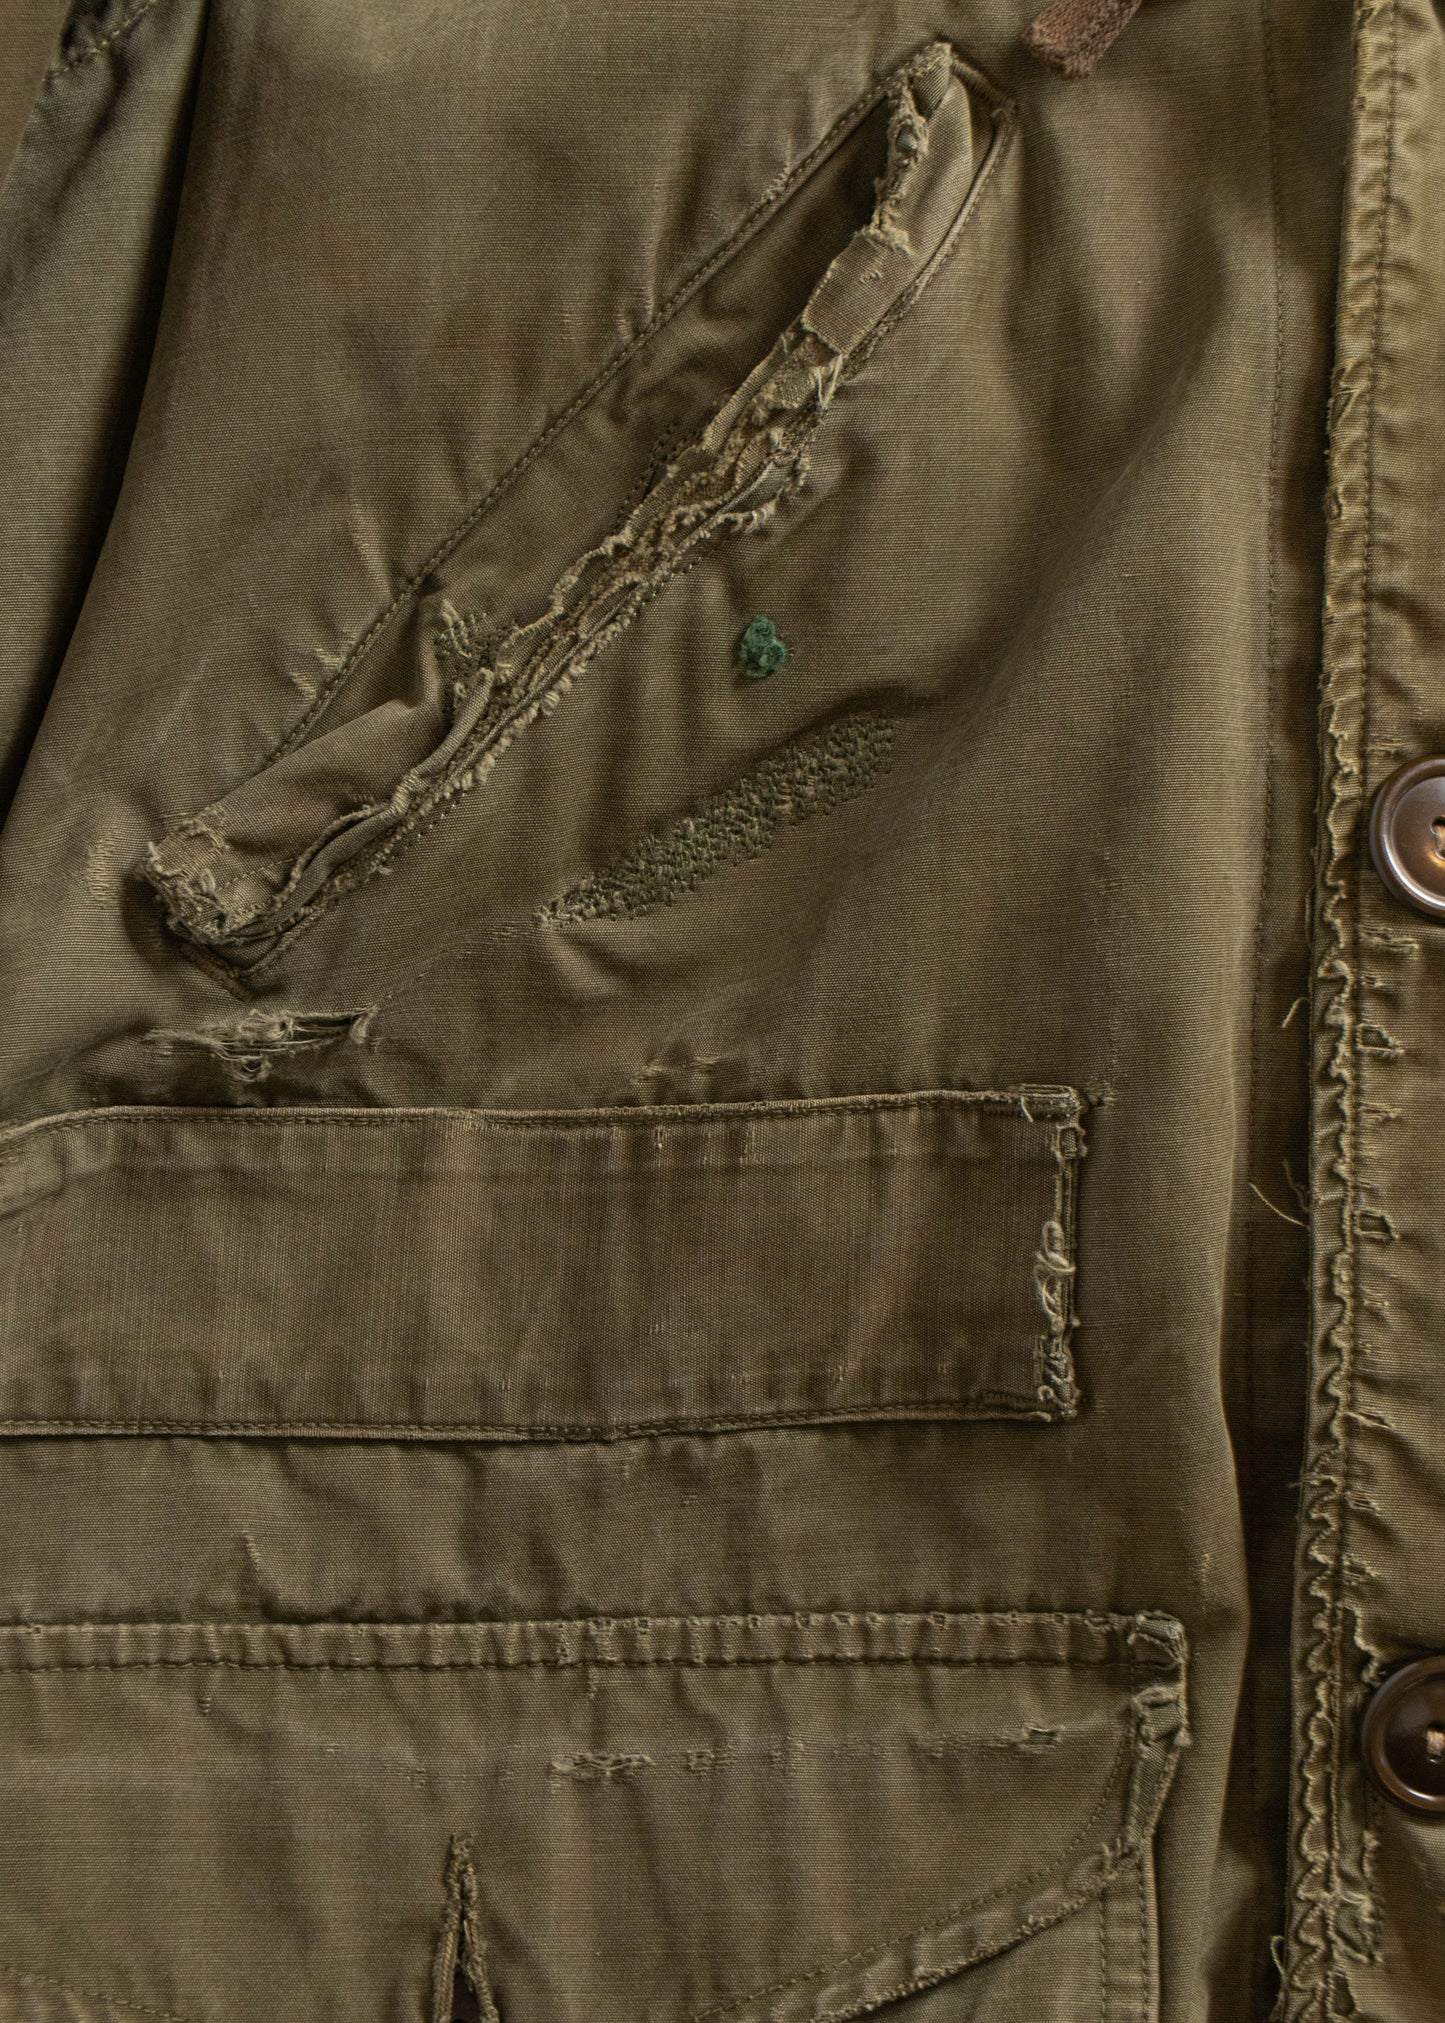 Vintage 1951 Military Air Force Overcoat Parka Jacket Size M/L